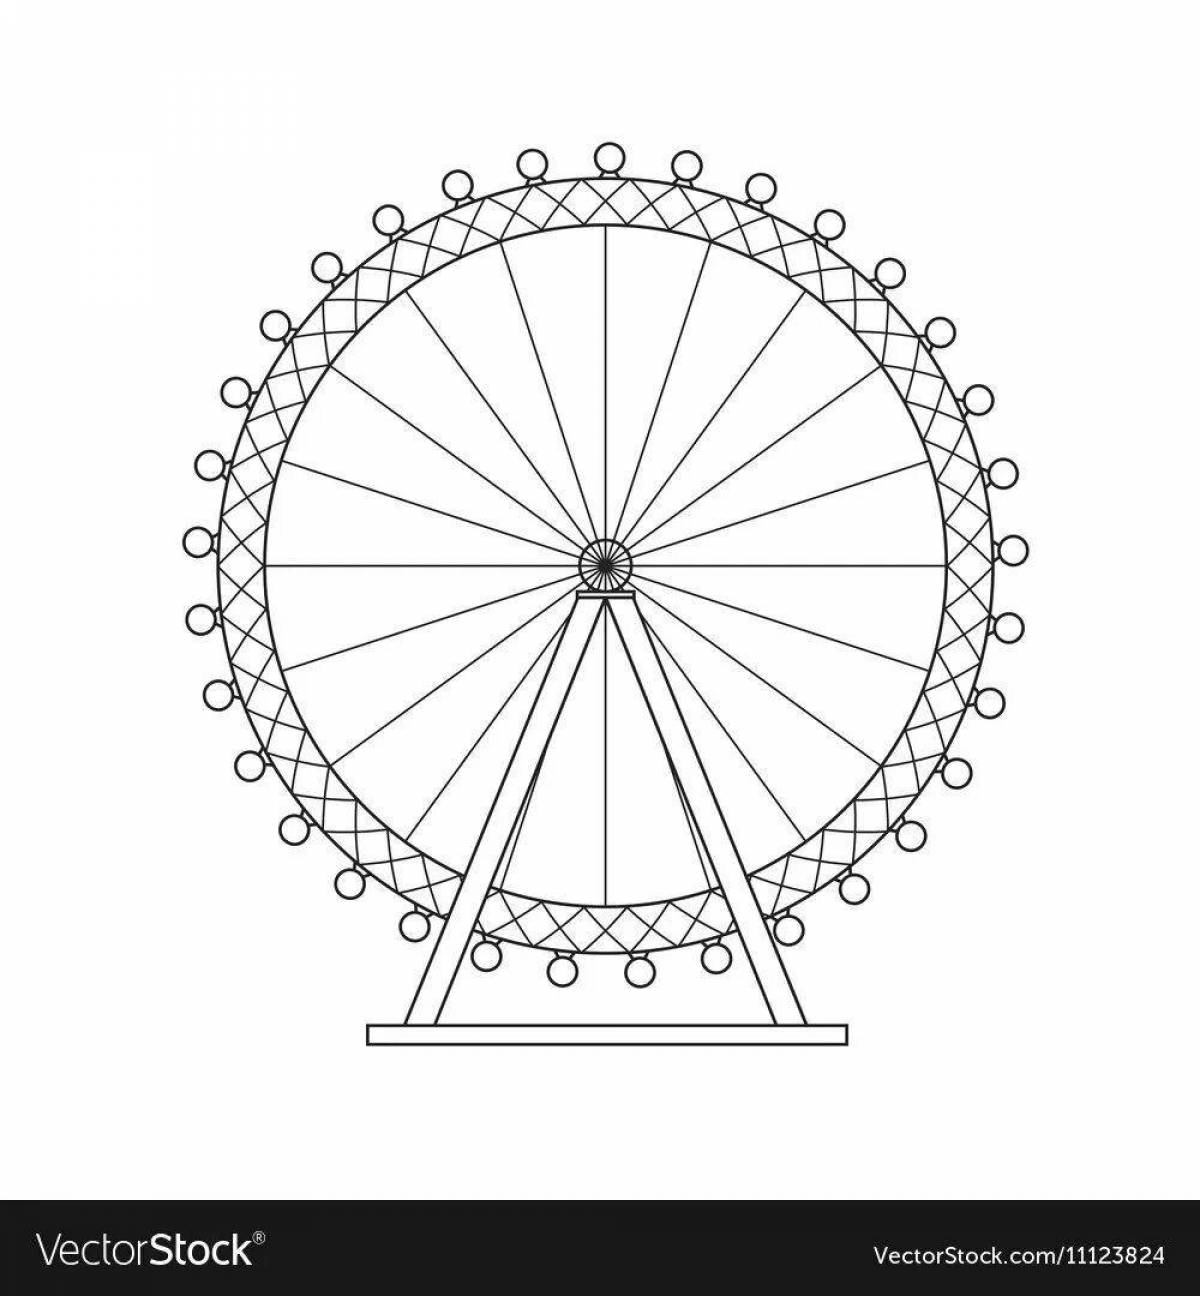 Coloring Ferris wheel for kids